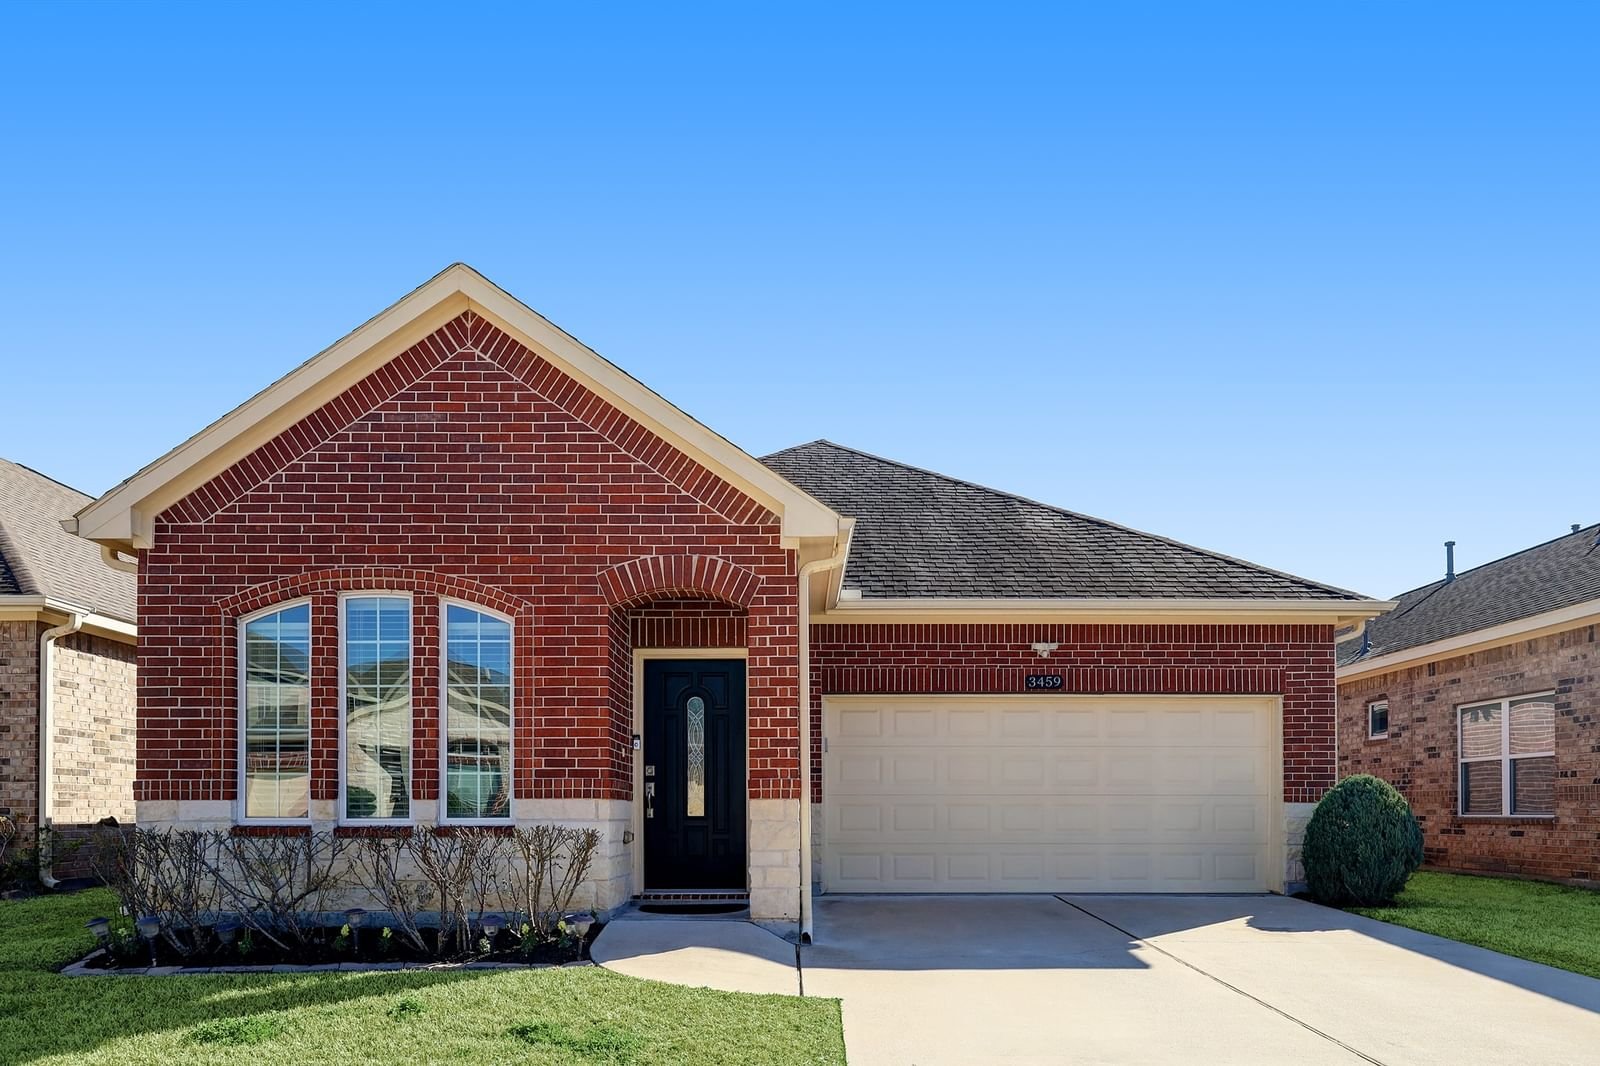 Real estate property located at 3459 Talia Wood, Fort Bend, Talia Wood Patio Homes, Missouri City, TX, US